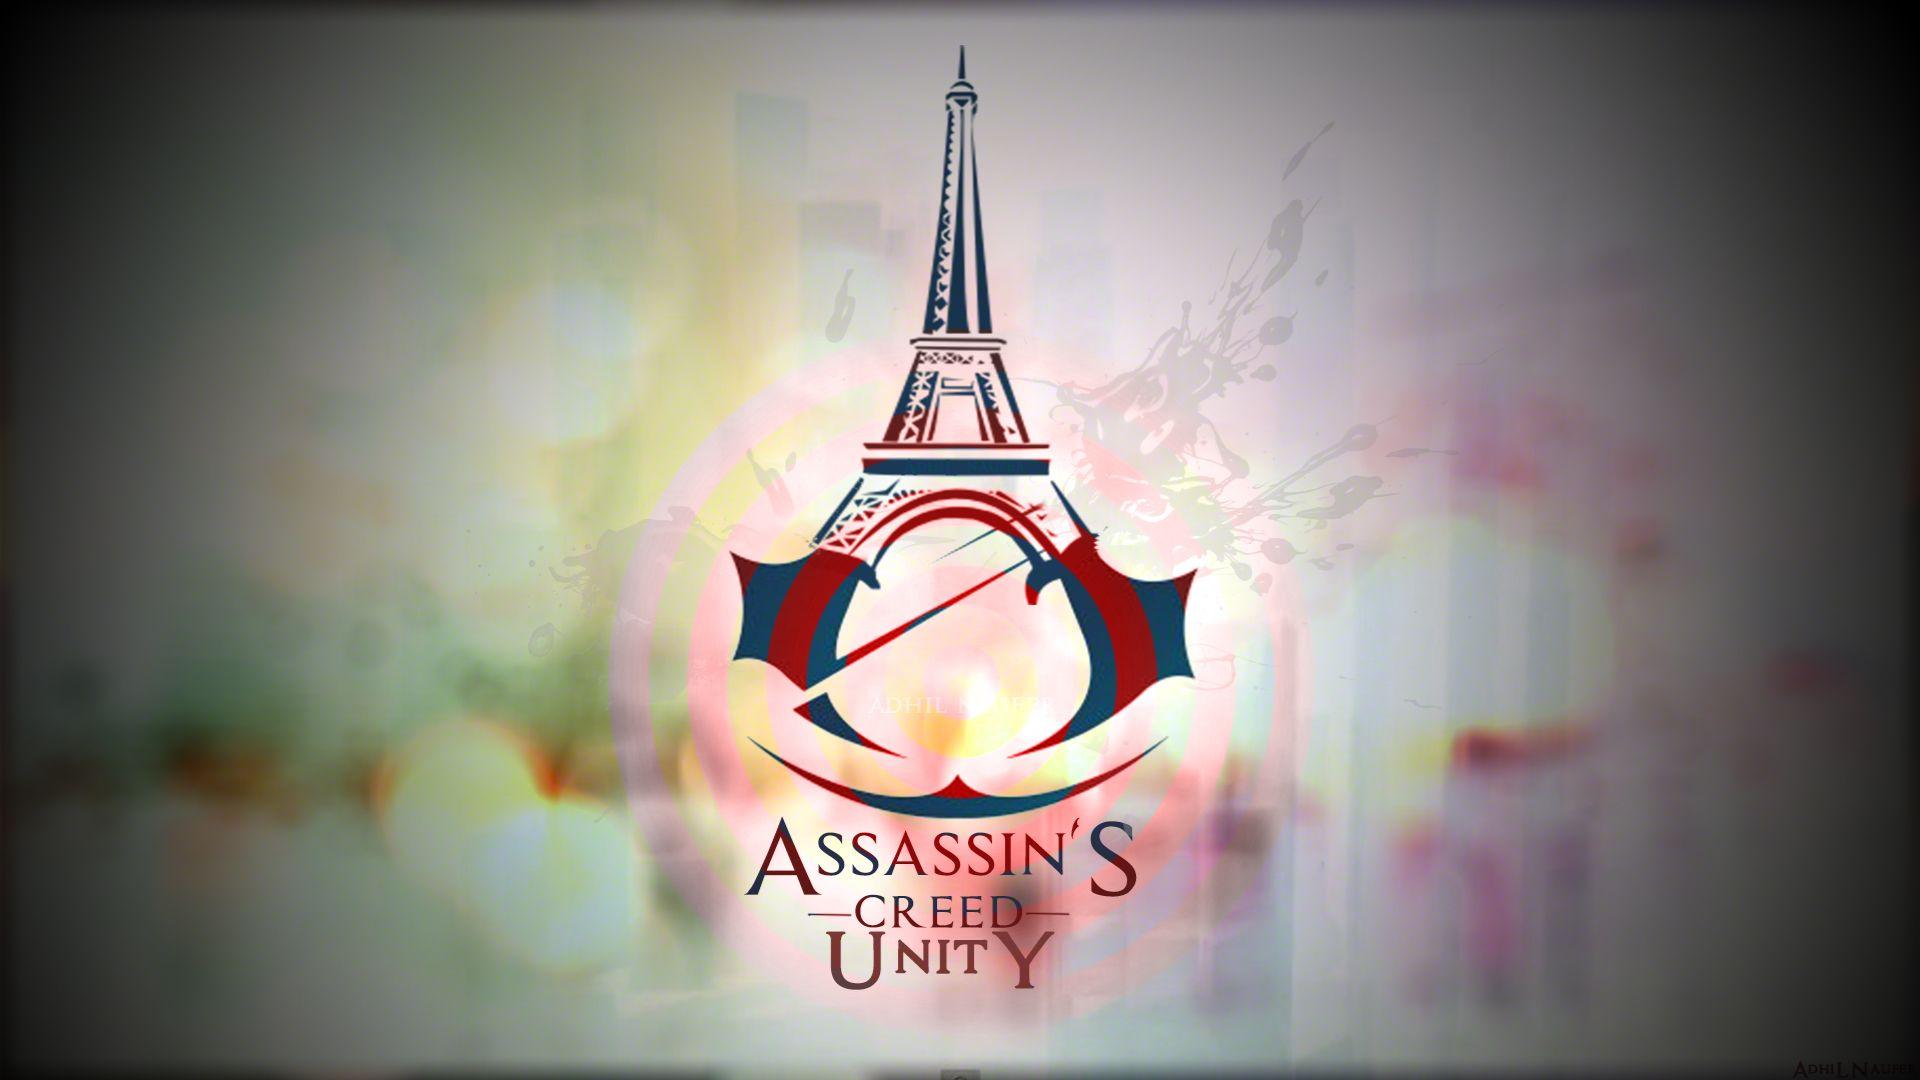 Assassin's Creed Unity Full HD Wallpaper